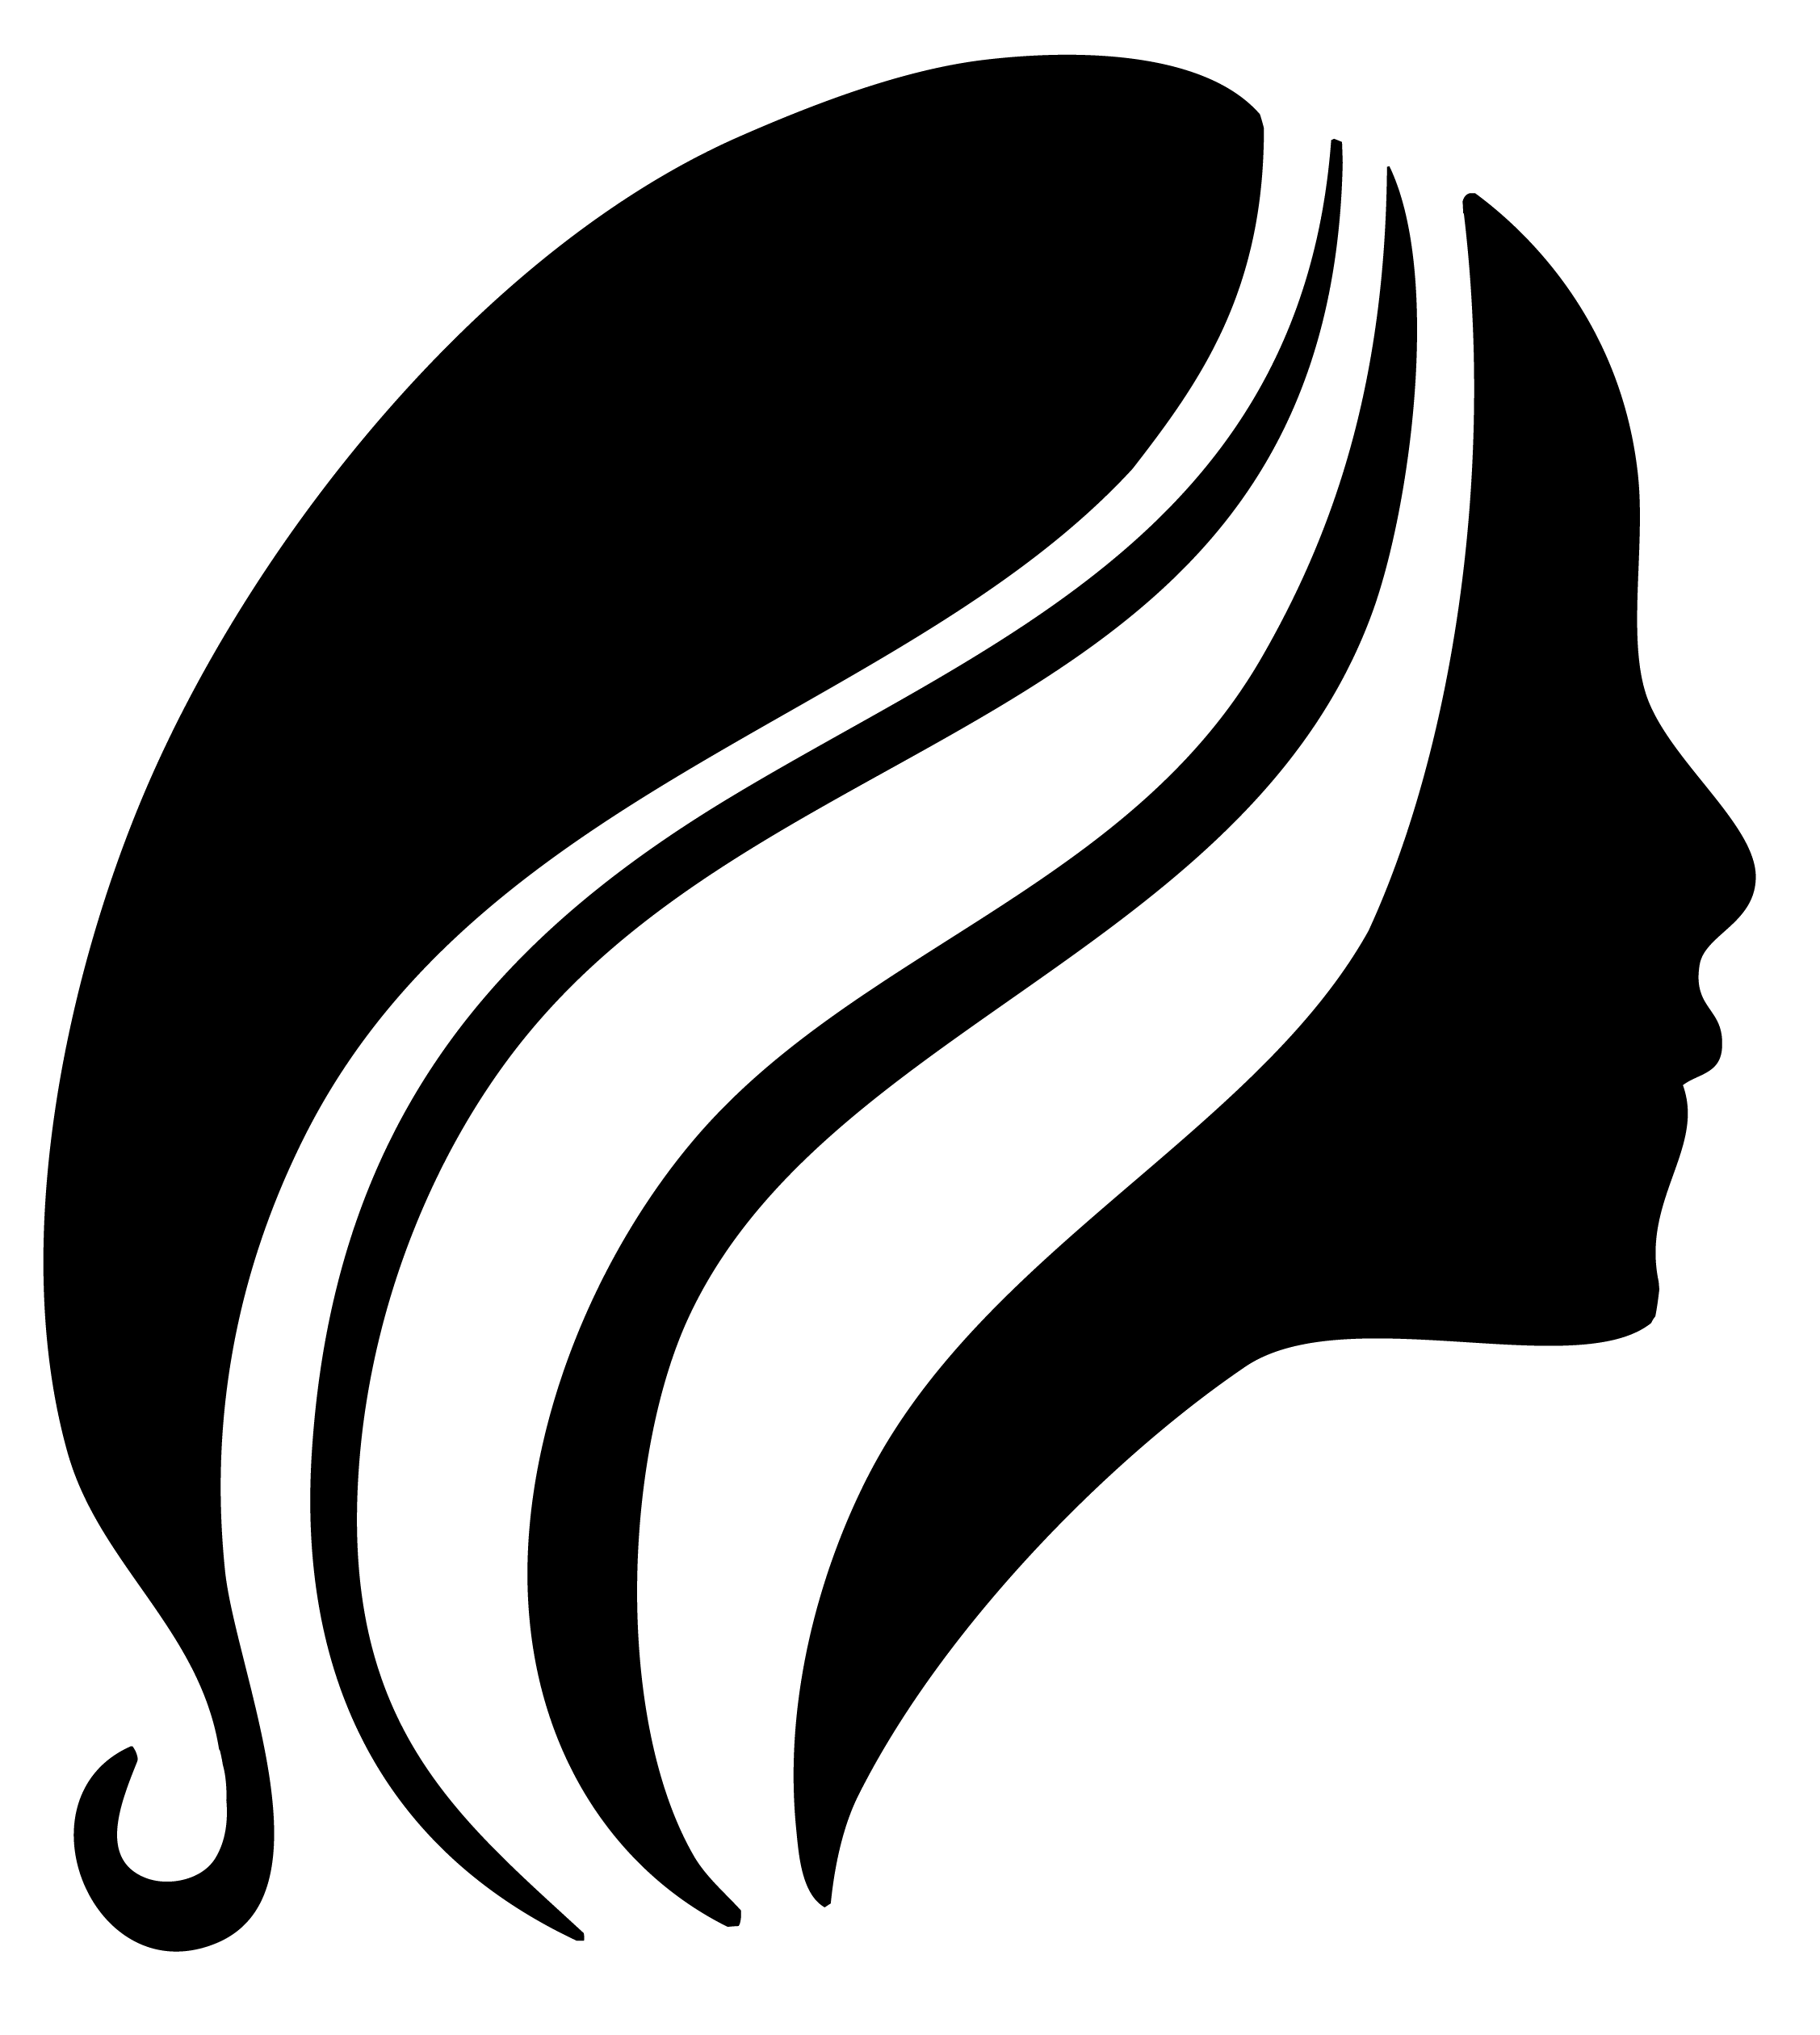 Hairdresser clipart transparent. Images of hair salon